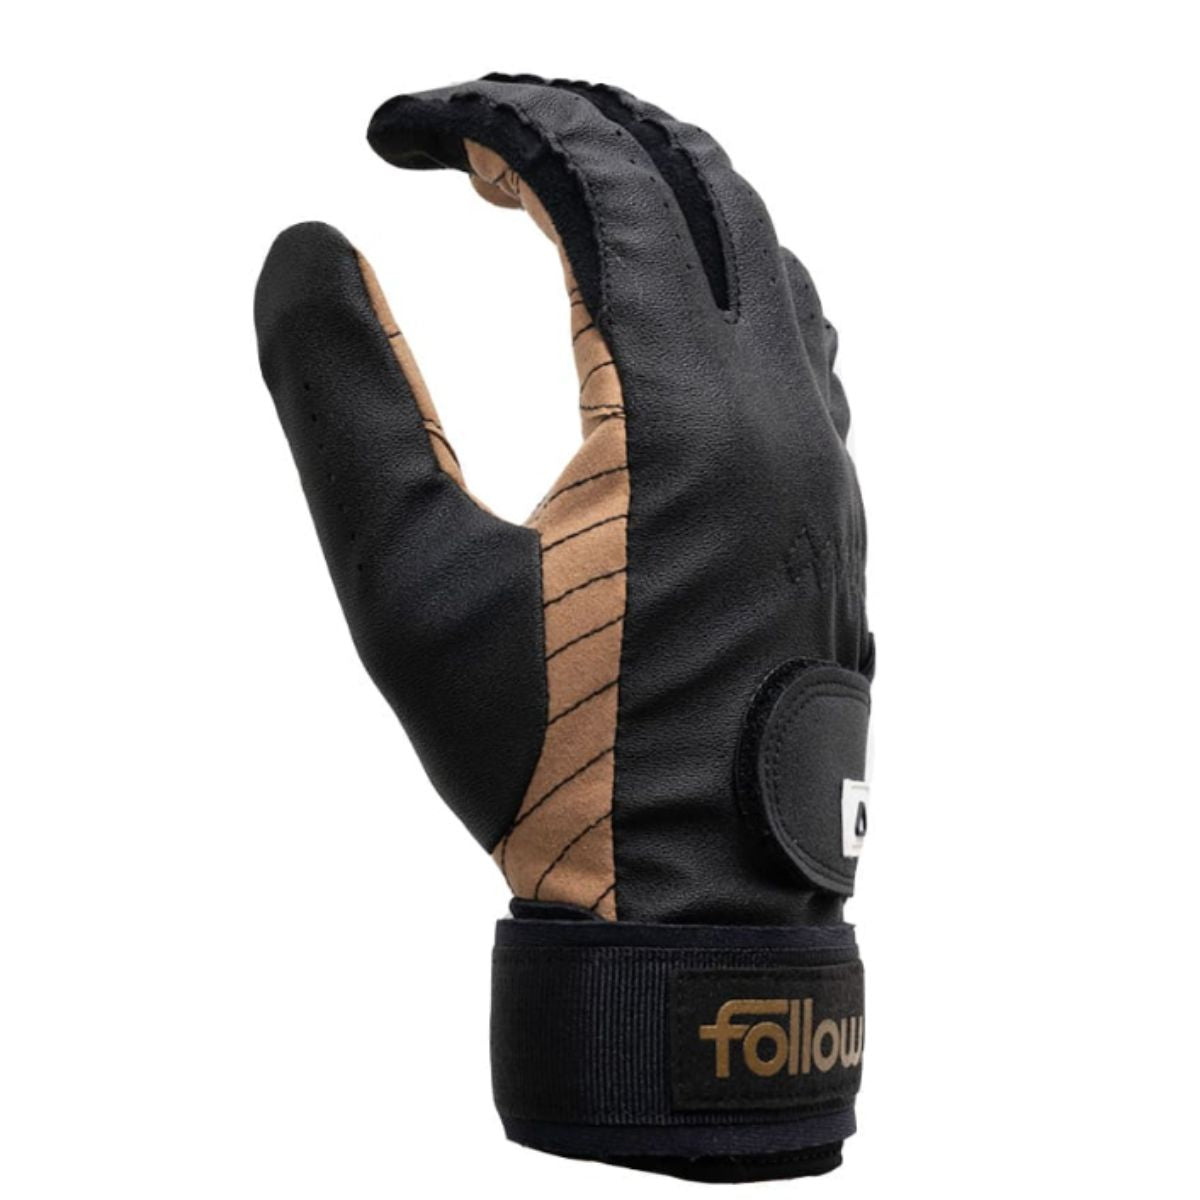 Follow Origins Pro Amara Glove in Black - BoardCo